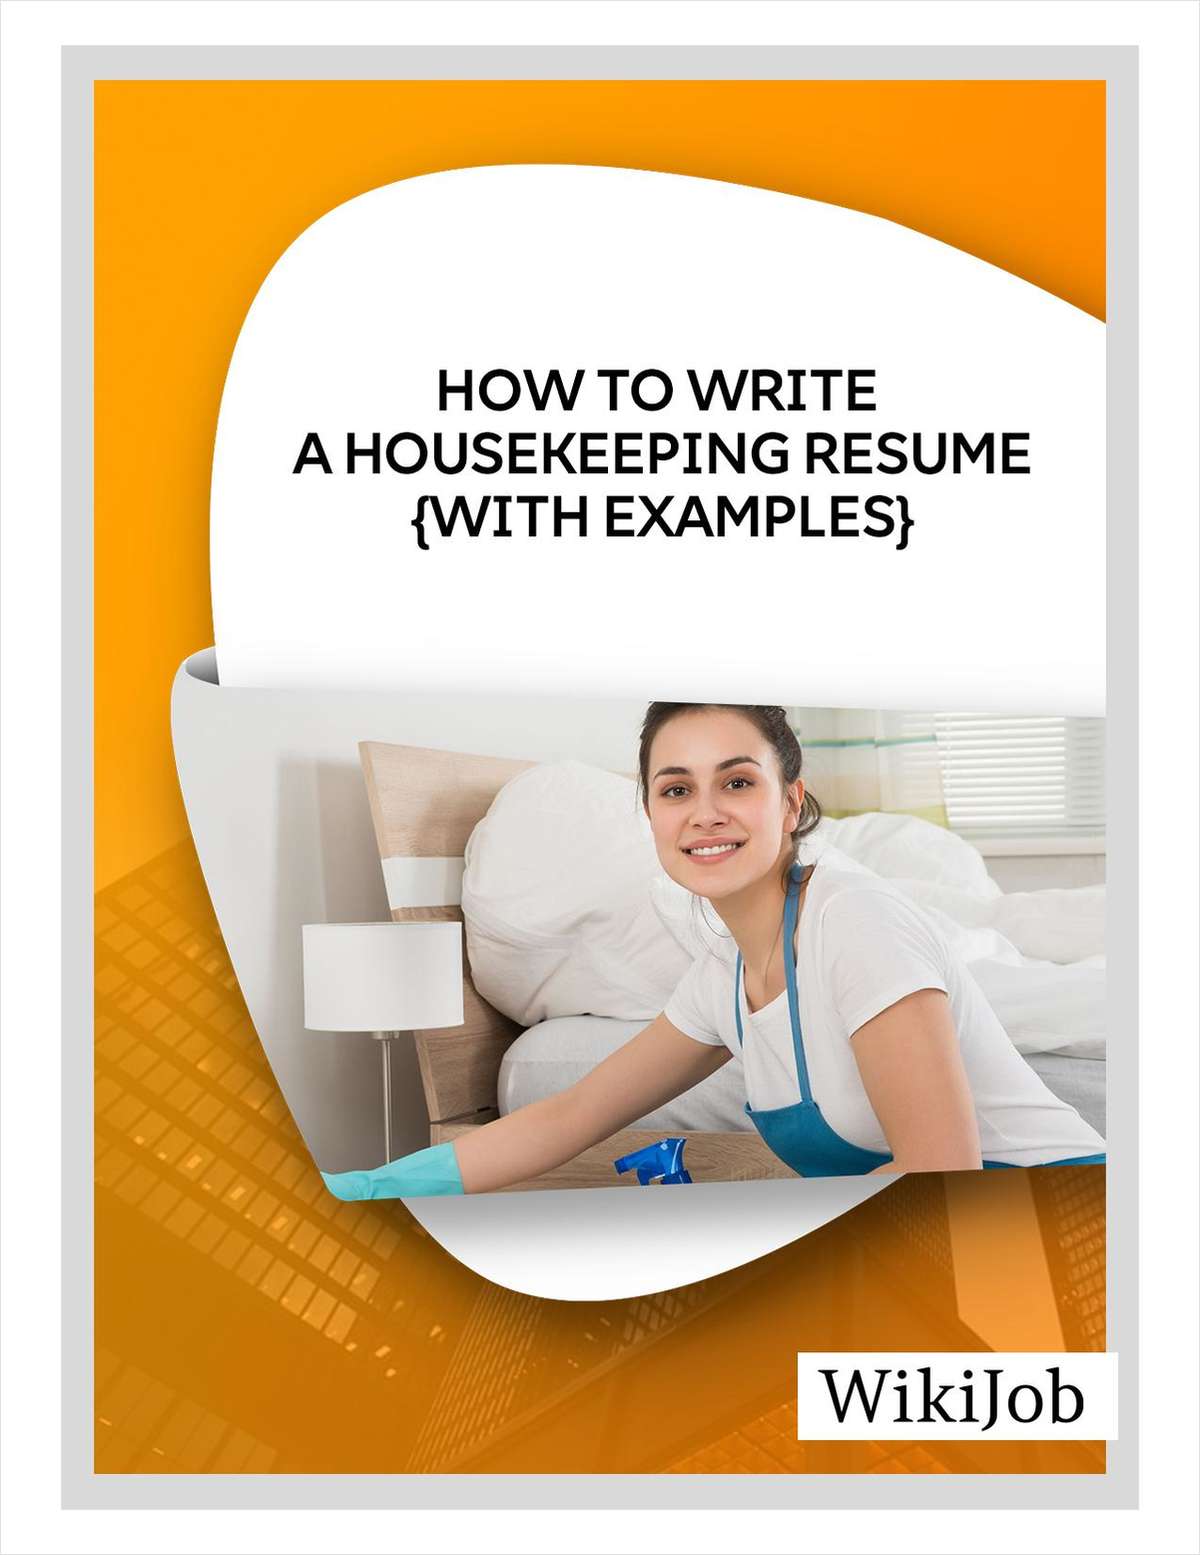 How to Write a Housekeeping Resume